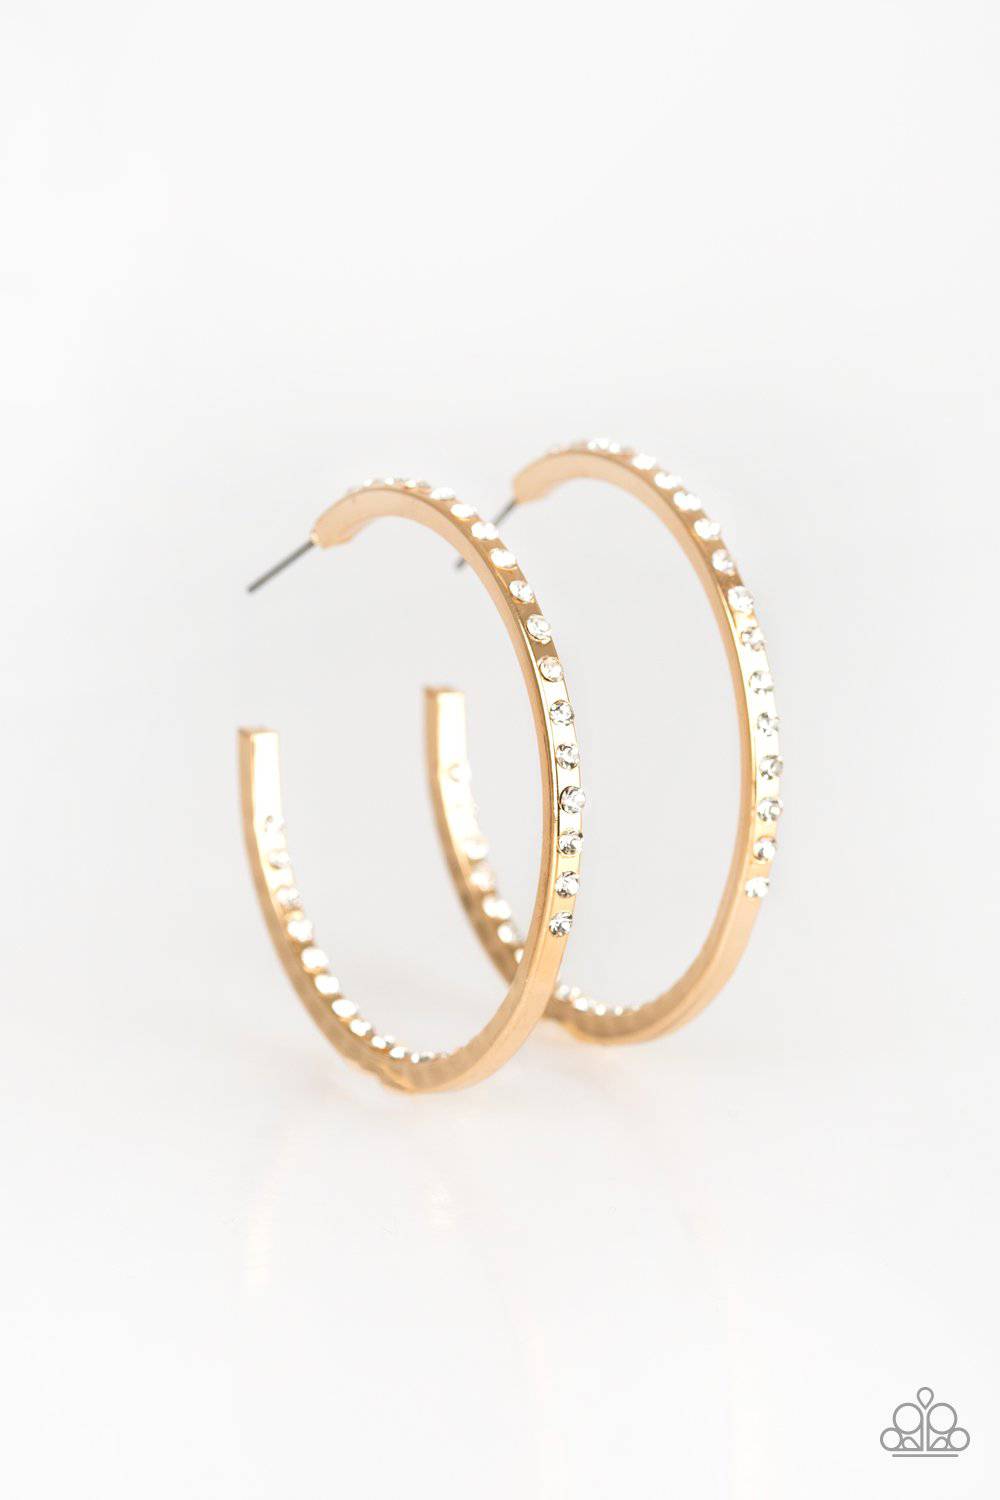 Comin Into Money - Gold Rhinestone Earrings - Paparazzi Accessories - GlaMarous Titi Jewels